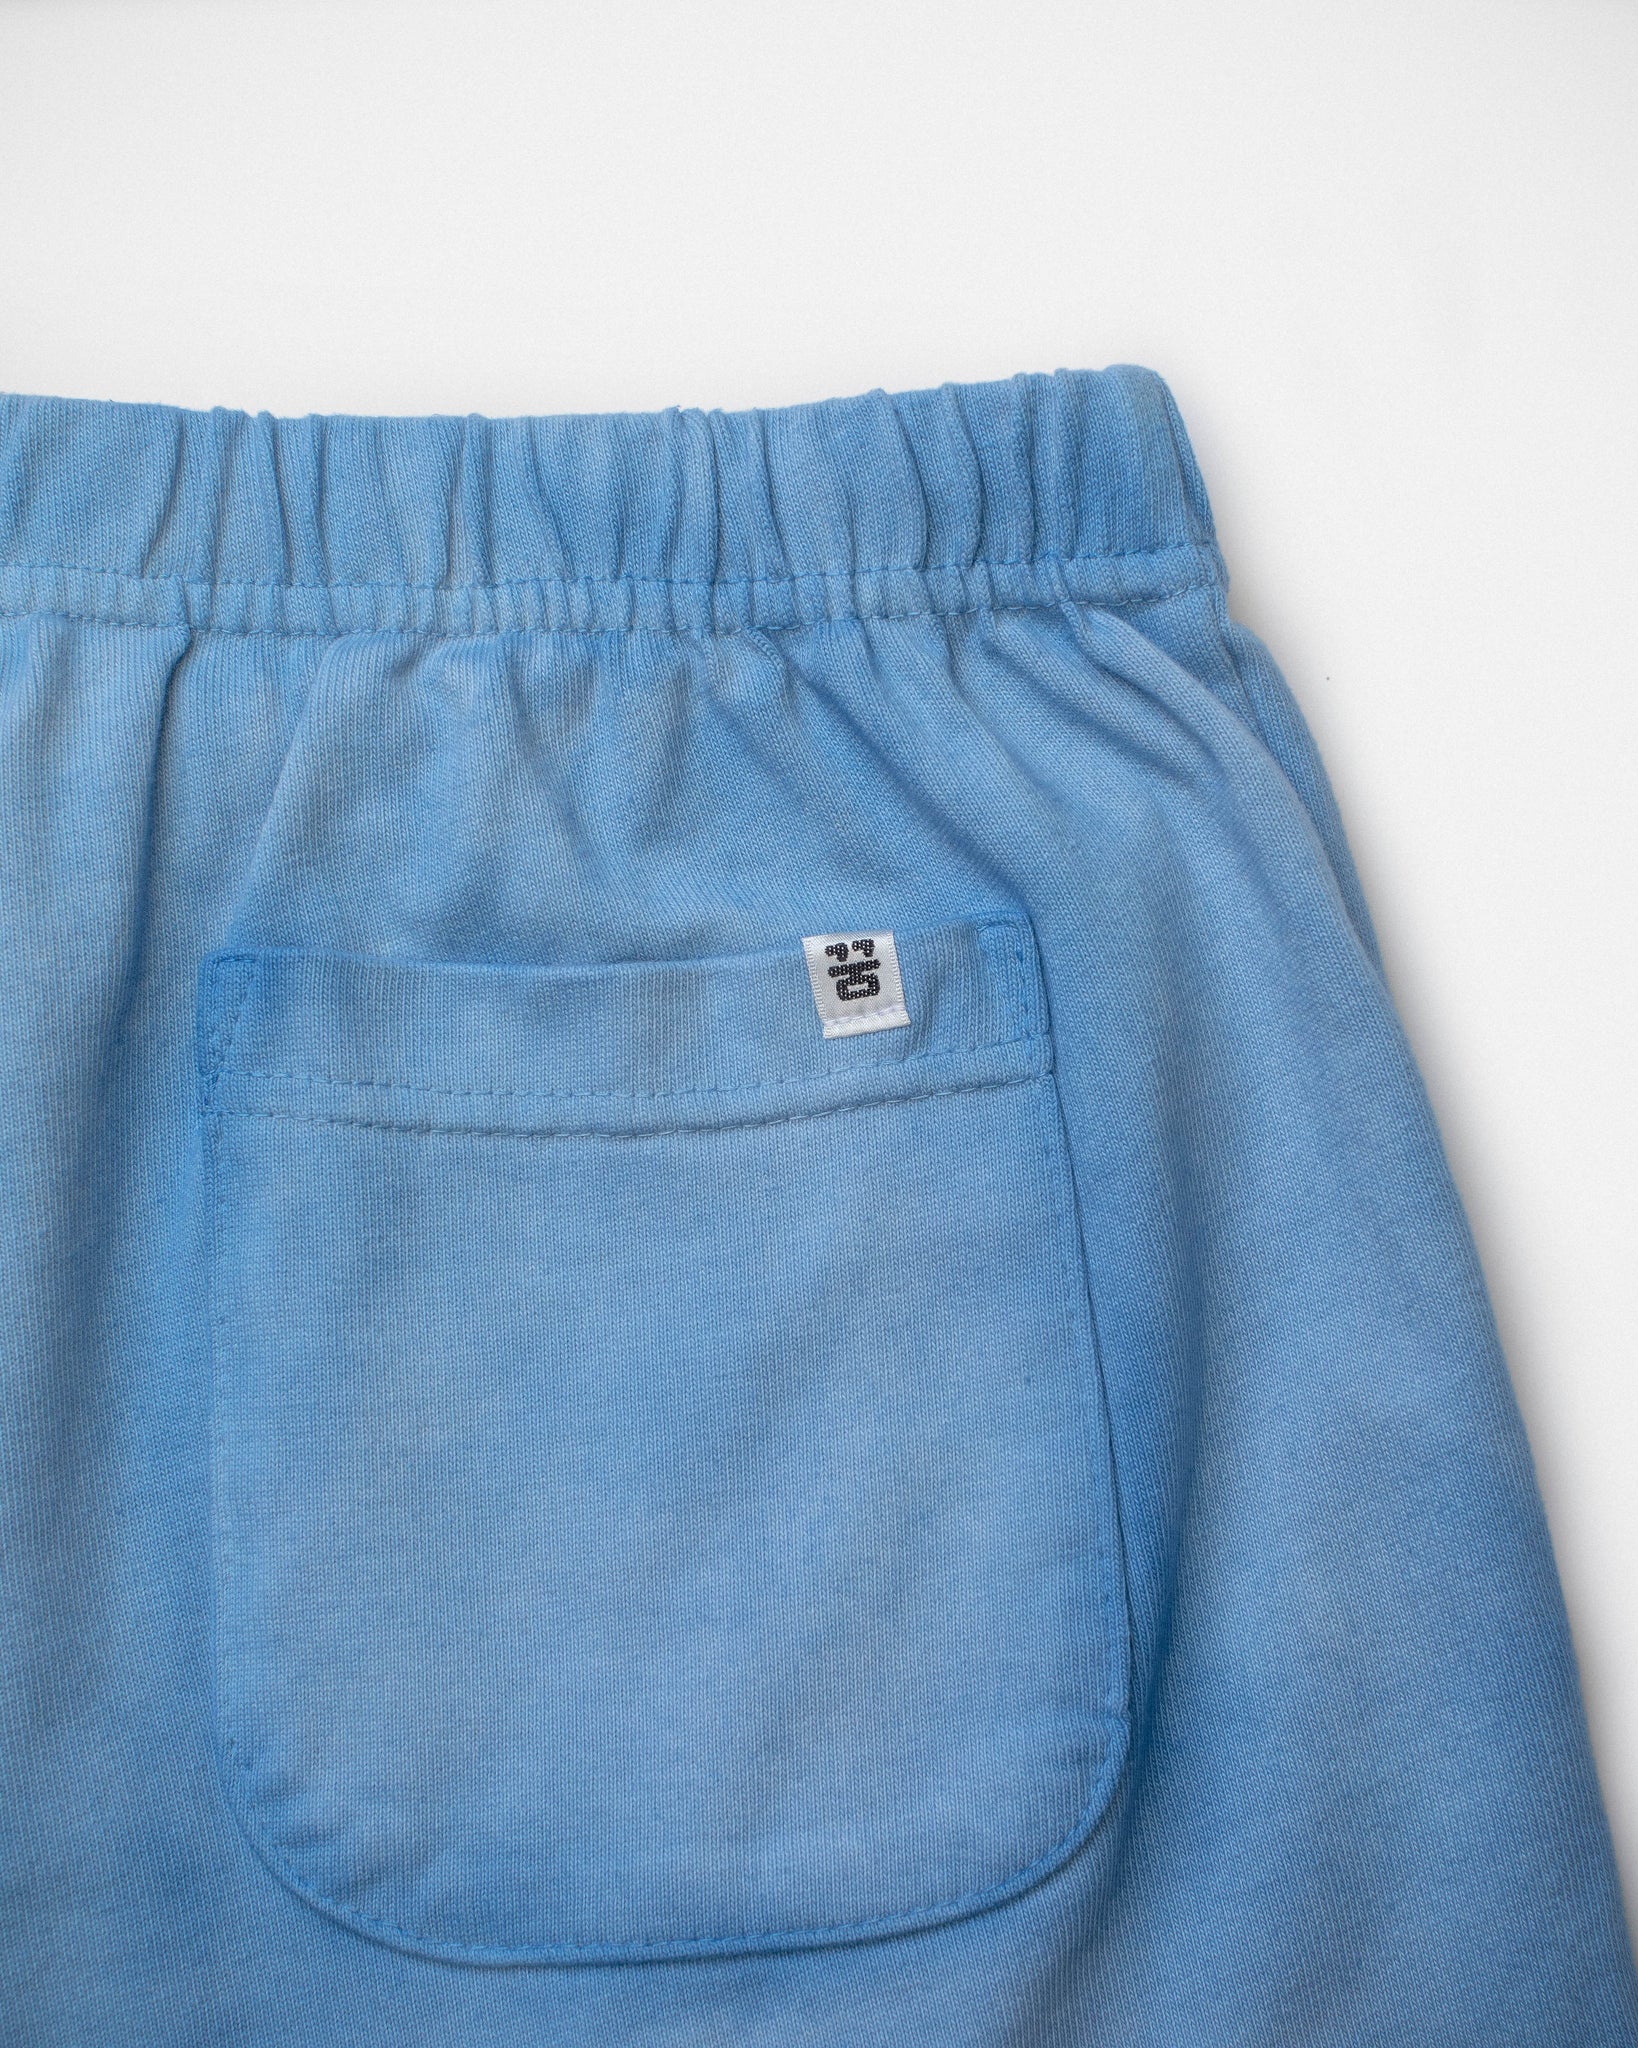 Gym Shorts - Sun faded Blue